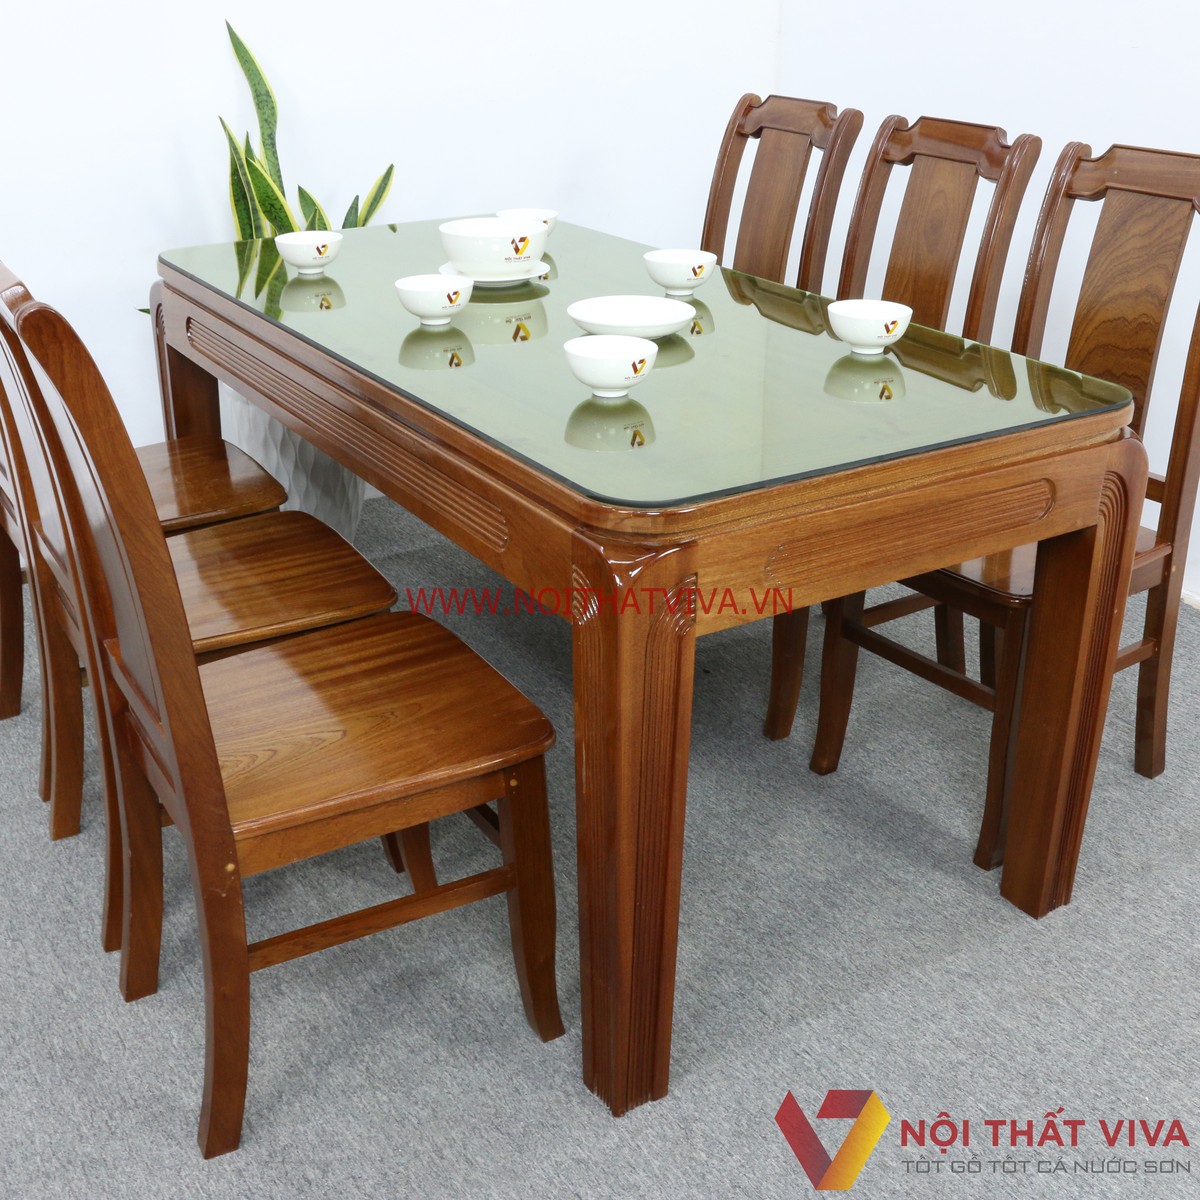 bàn ăn 6 ghế gỗ xoan đào